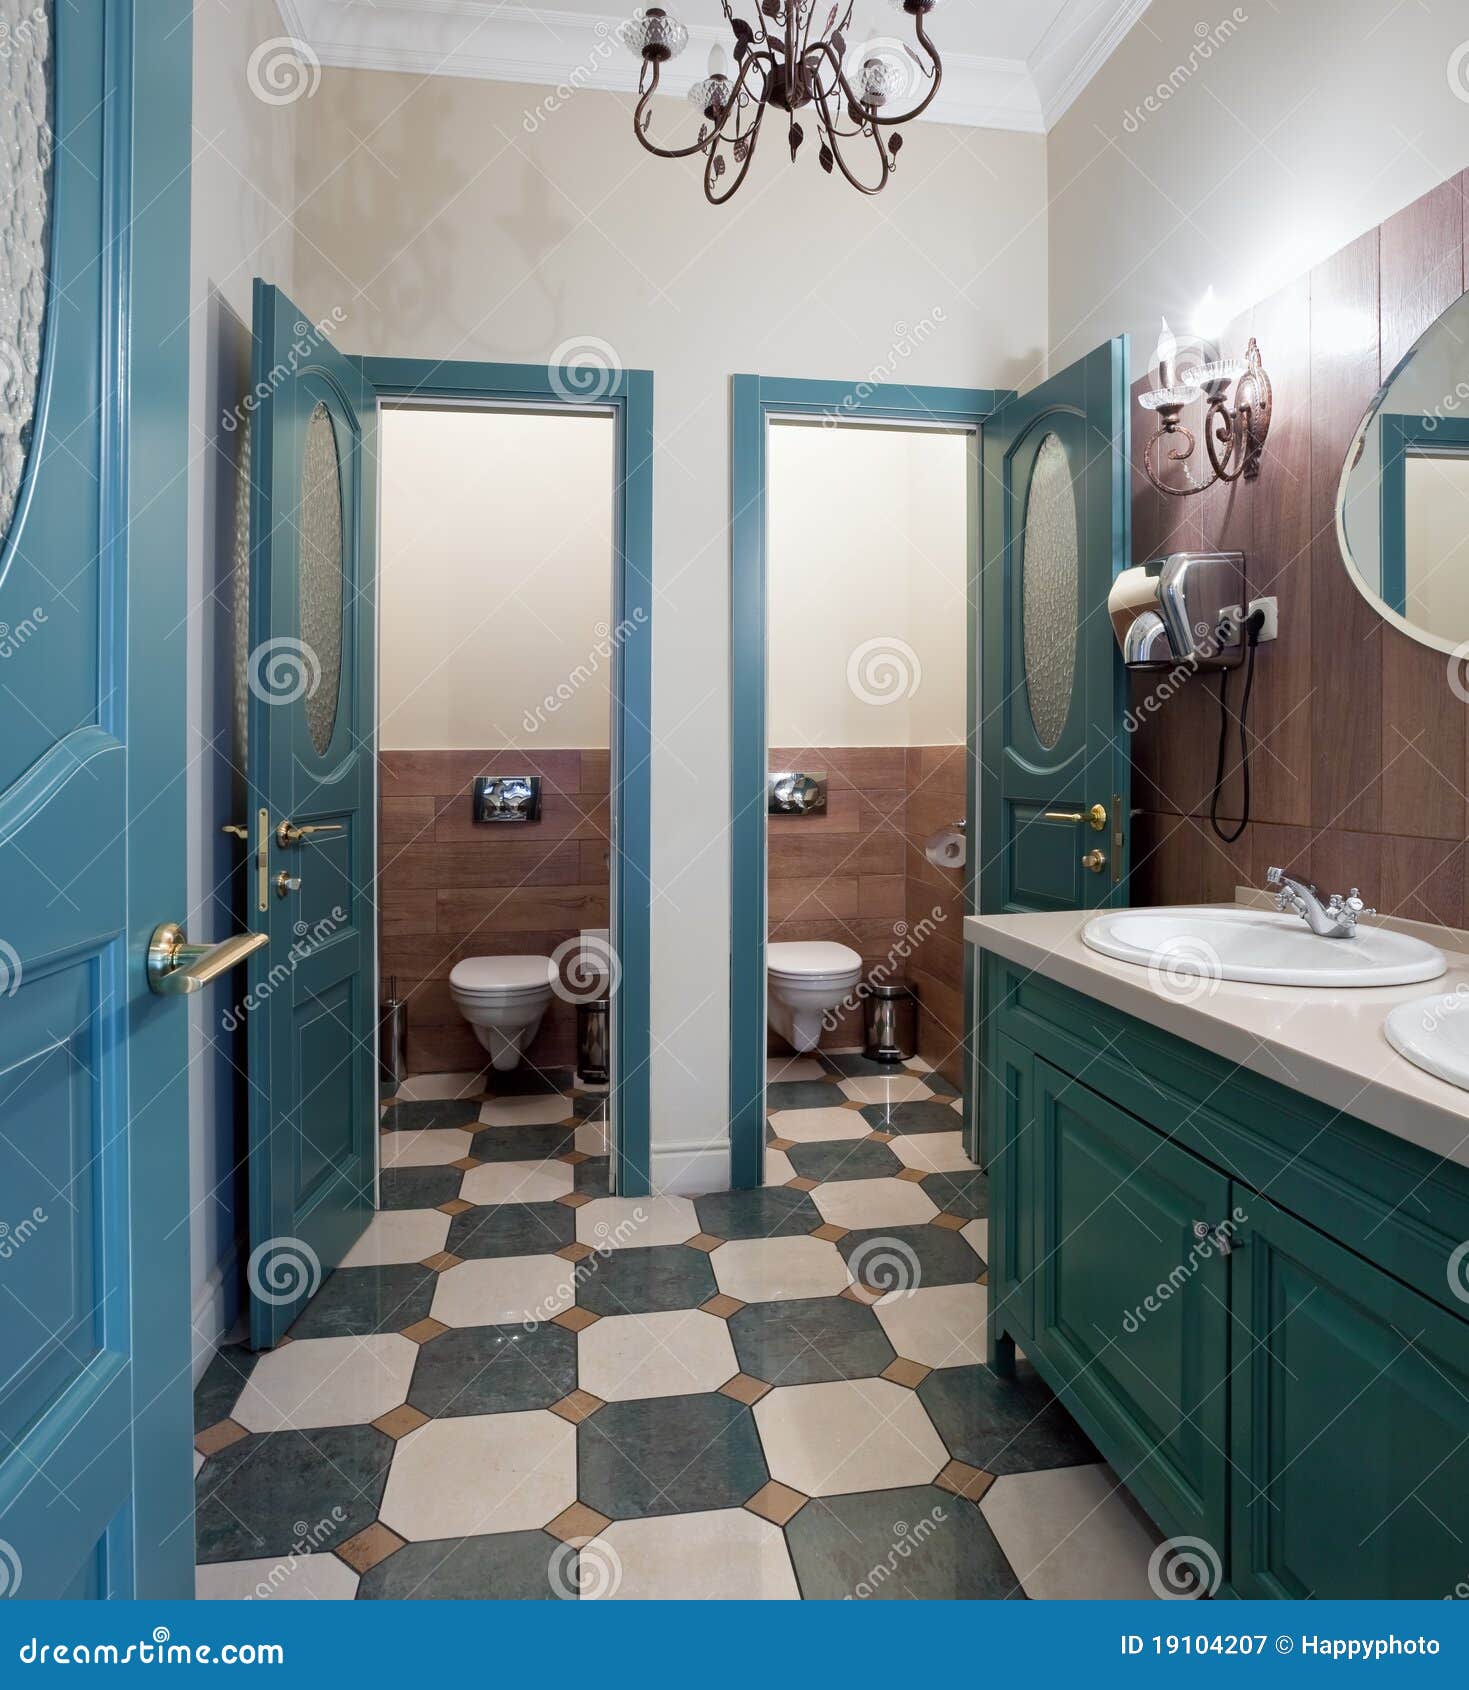 Public restroom interior stock image. Image of green - 19104207